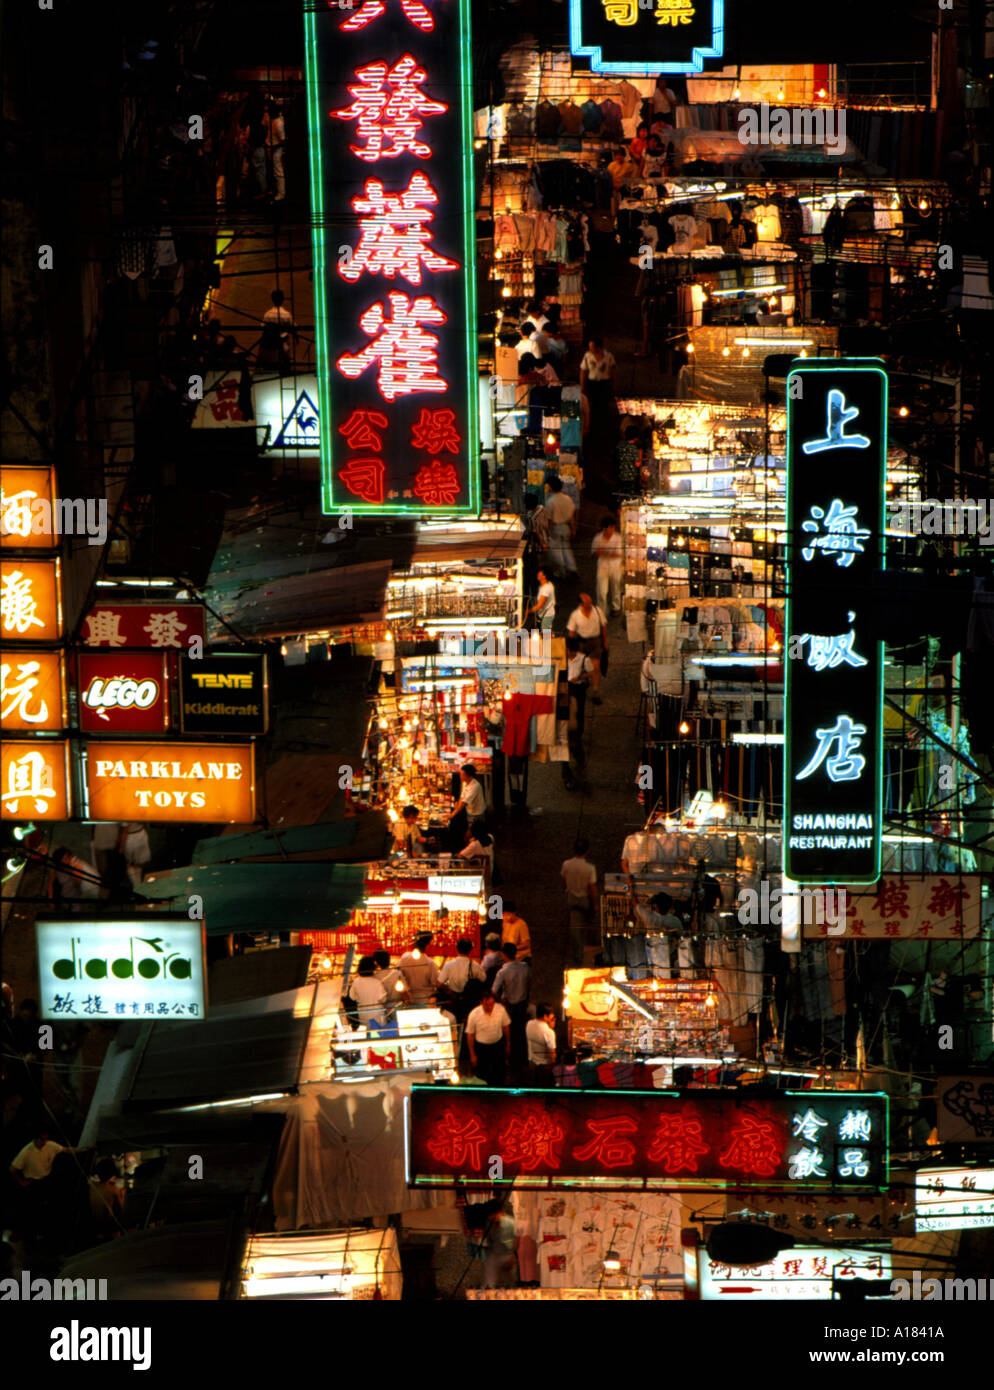 Tempel der Sinne Markt Tsim Sha Tsui Hong Kong China N Blythe Stockfoto